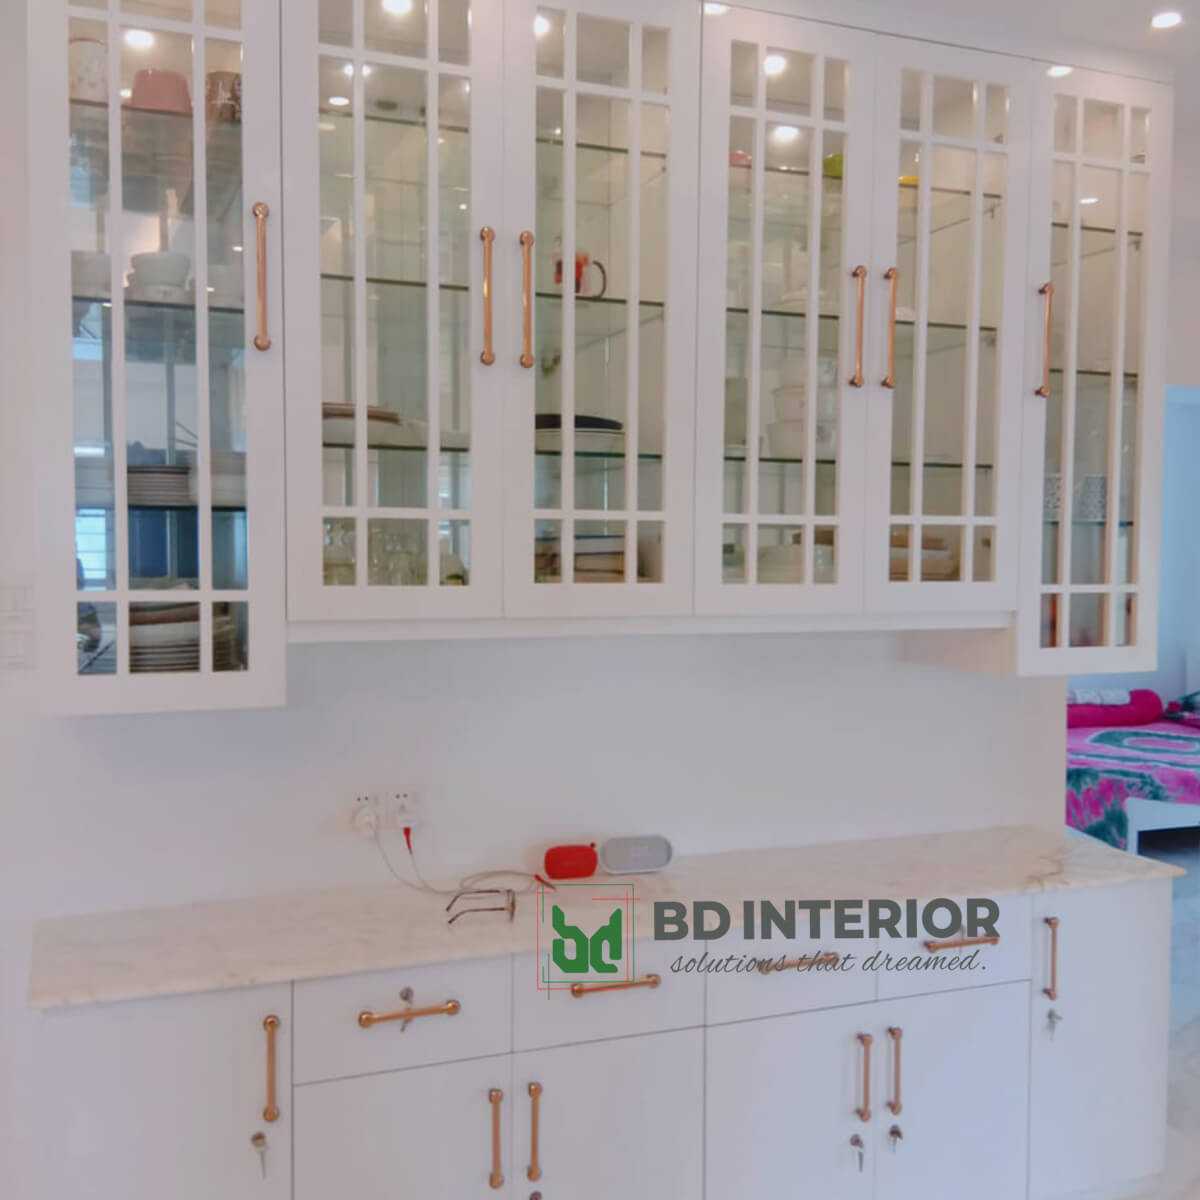 interior design company bd